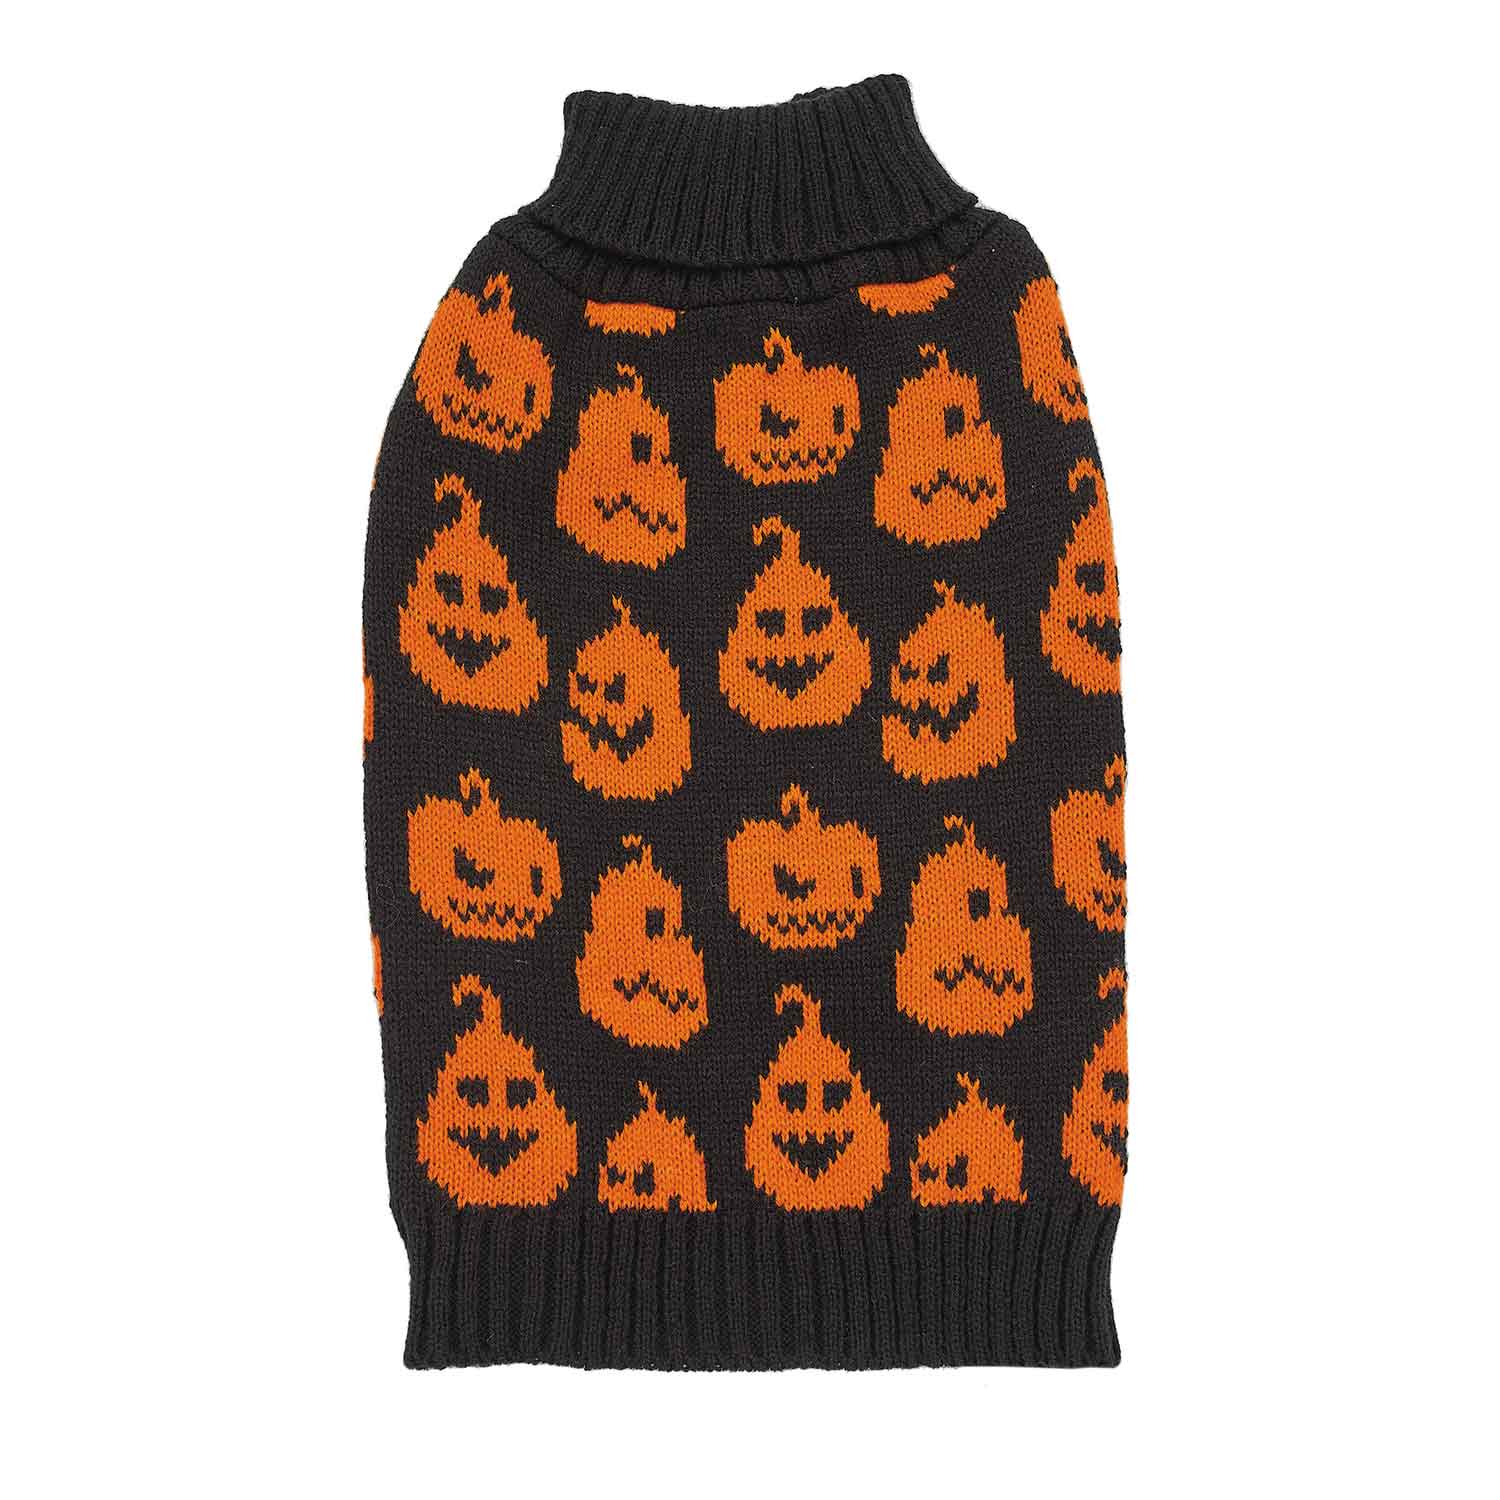 Zack & Zoey Jack O' Pumpkin Dog Sweater